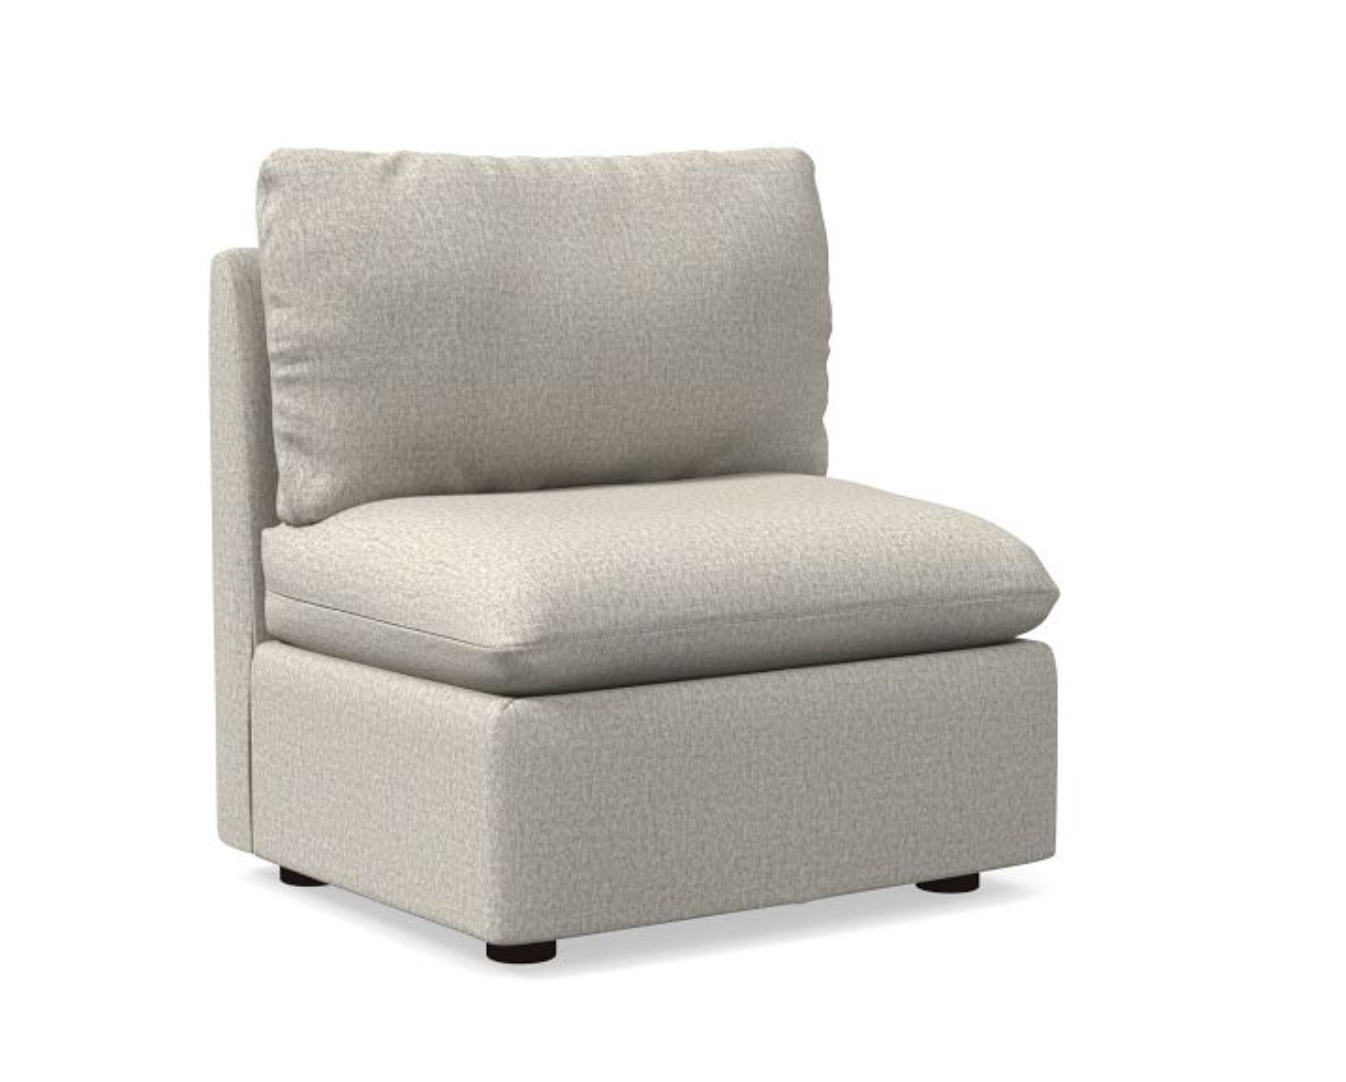 gray chair